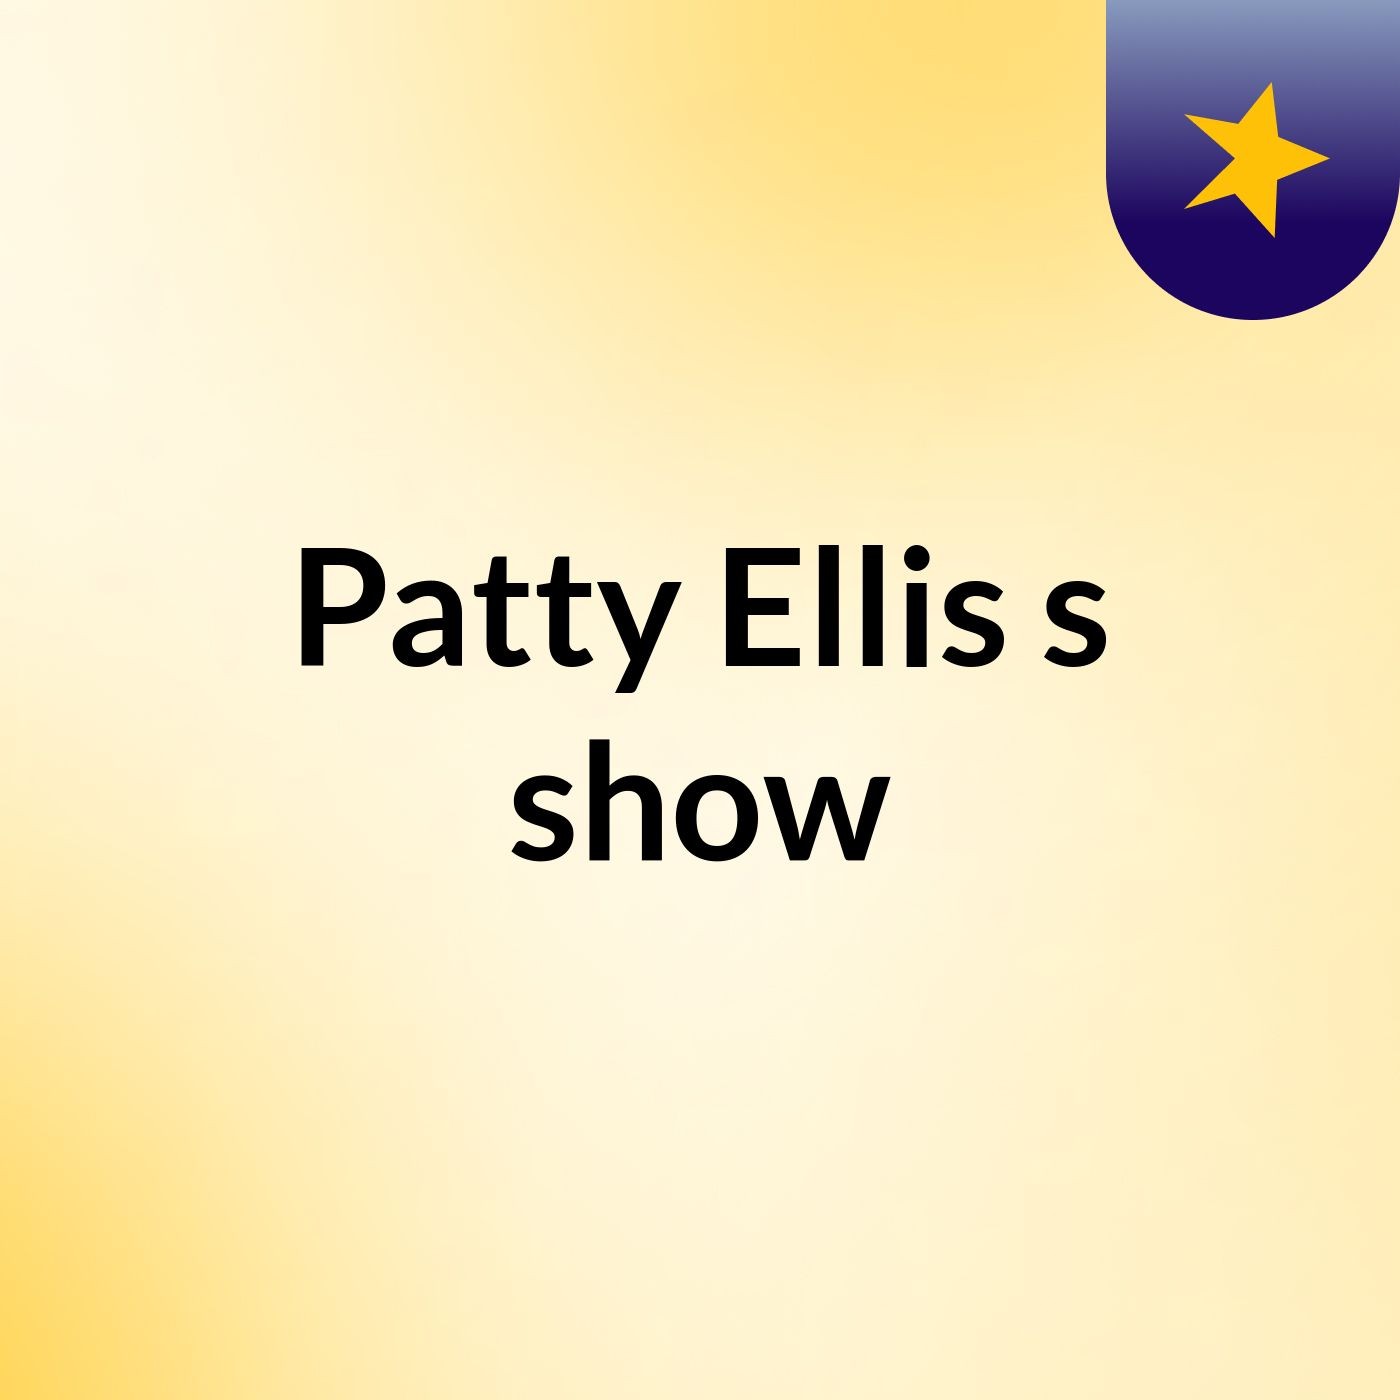 Patty Ellis's show